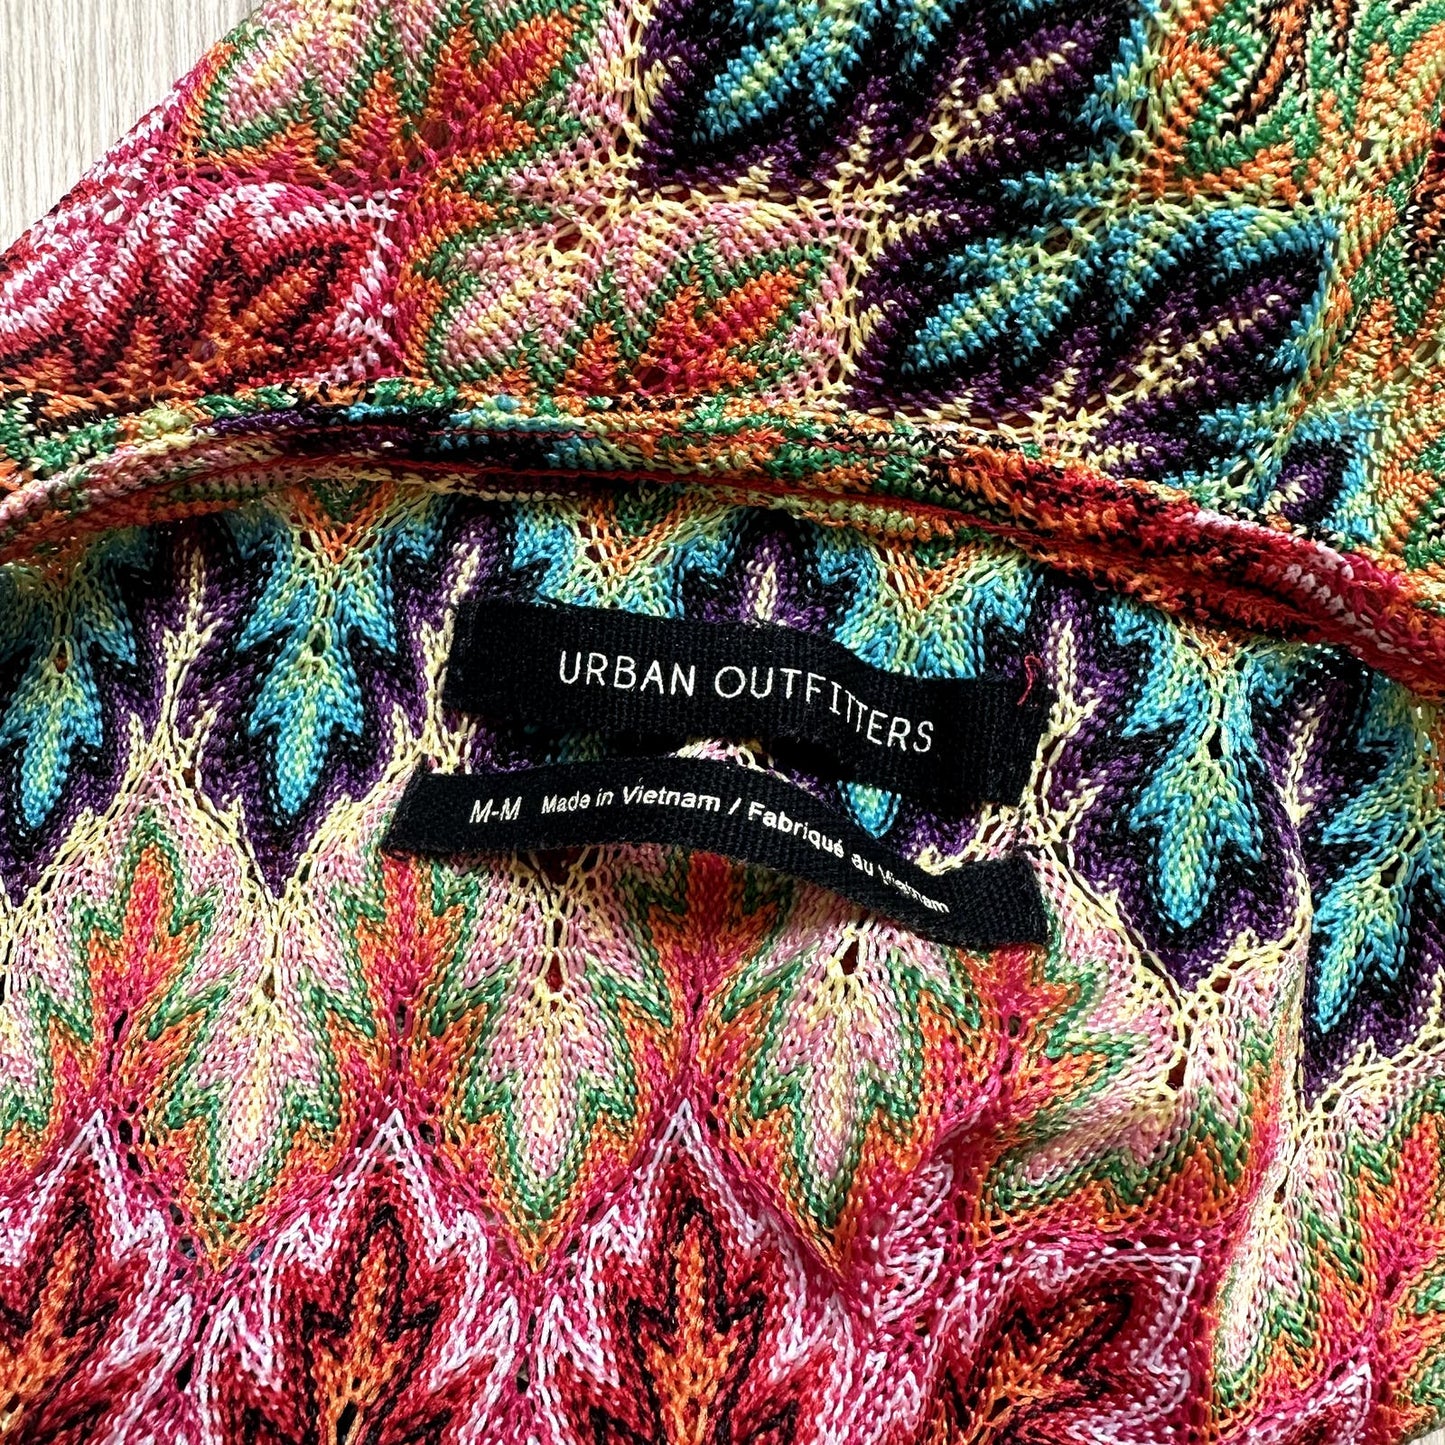 Urban Outfitters Harmonie handkerchief halter 70s inspired knit tank top